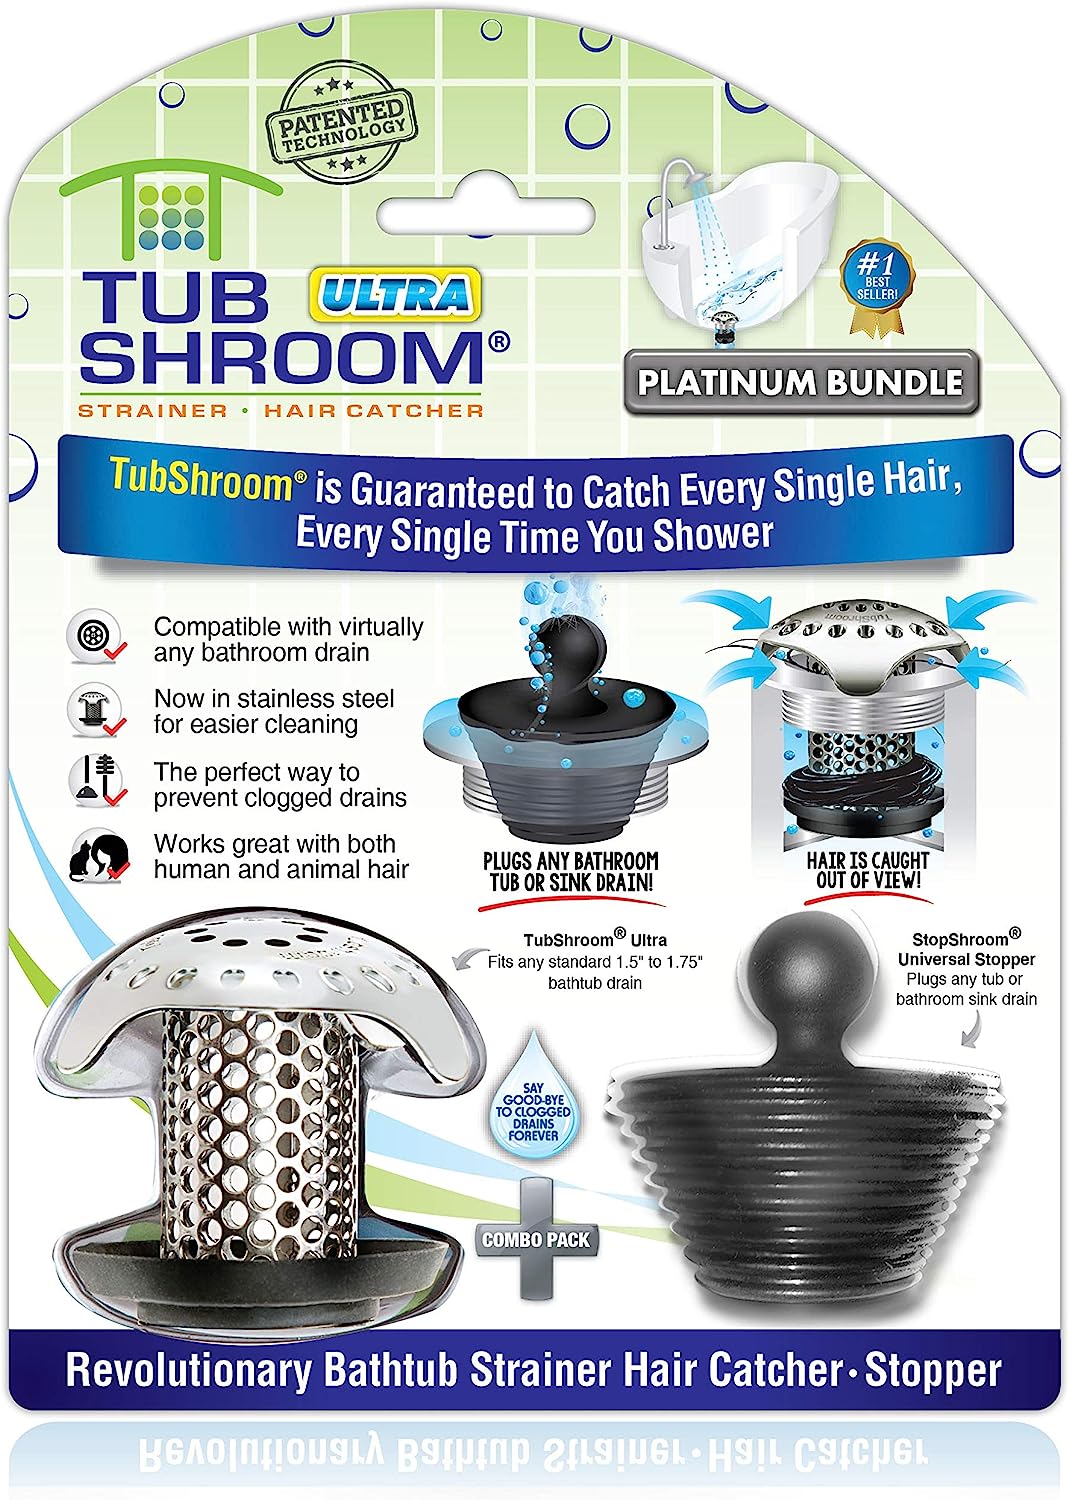 TubShroom Ultra Revolutionary Bath Tub Drain Protector [...]